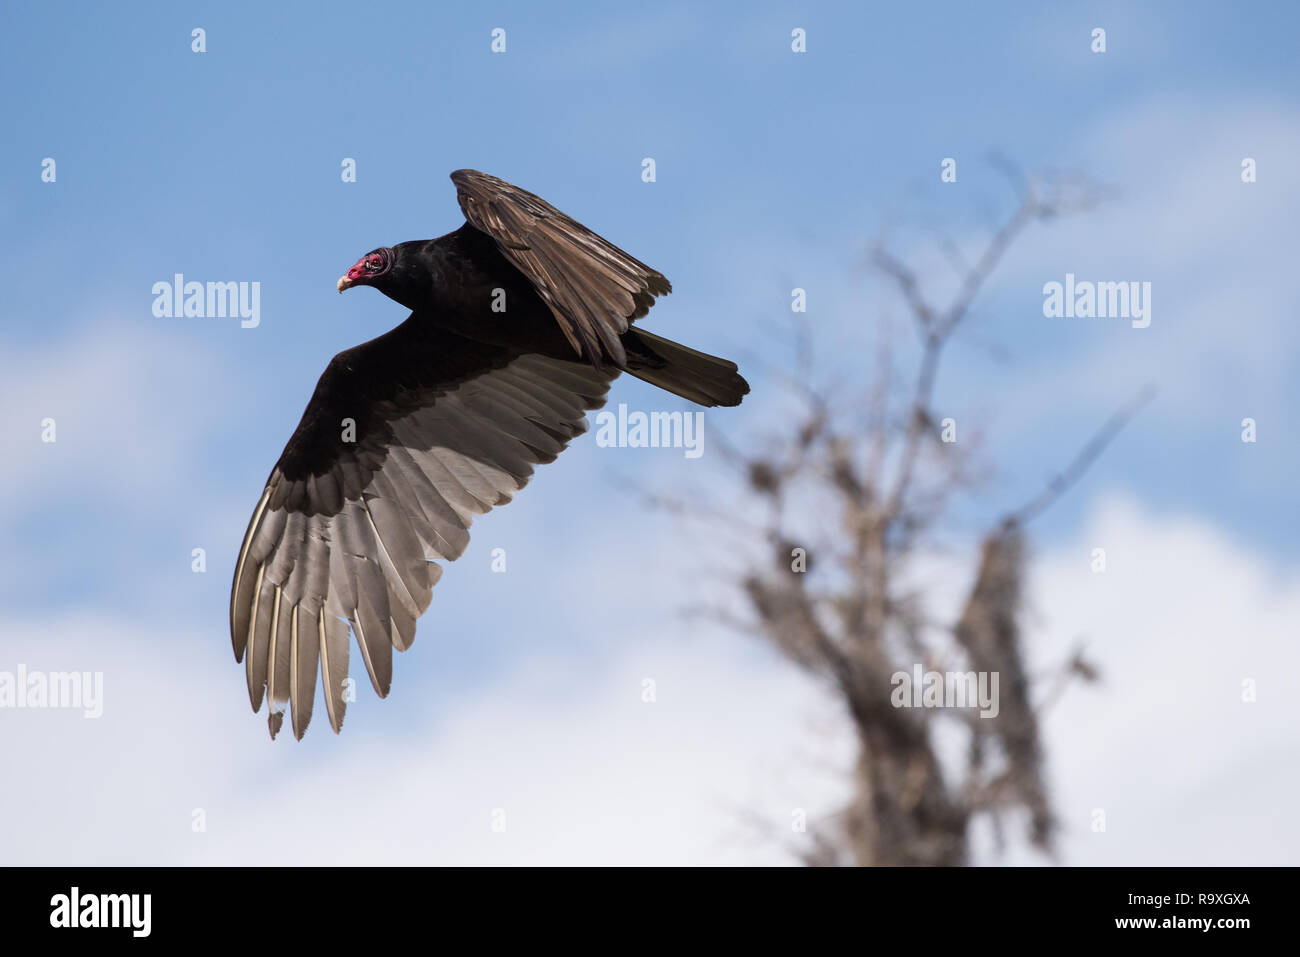 A Turkey Vulture soars through the Pine Island section of the Shingle Creek conservation area near Orlando, Florida. Stock Photo